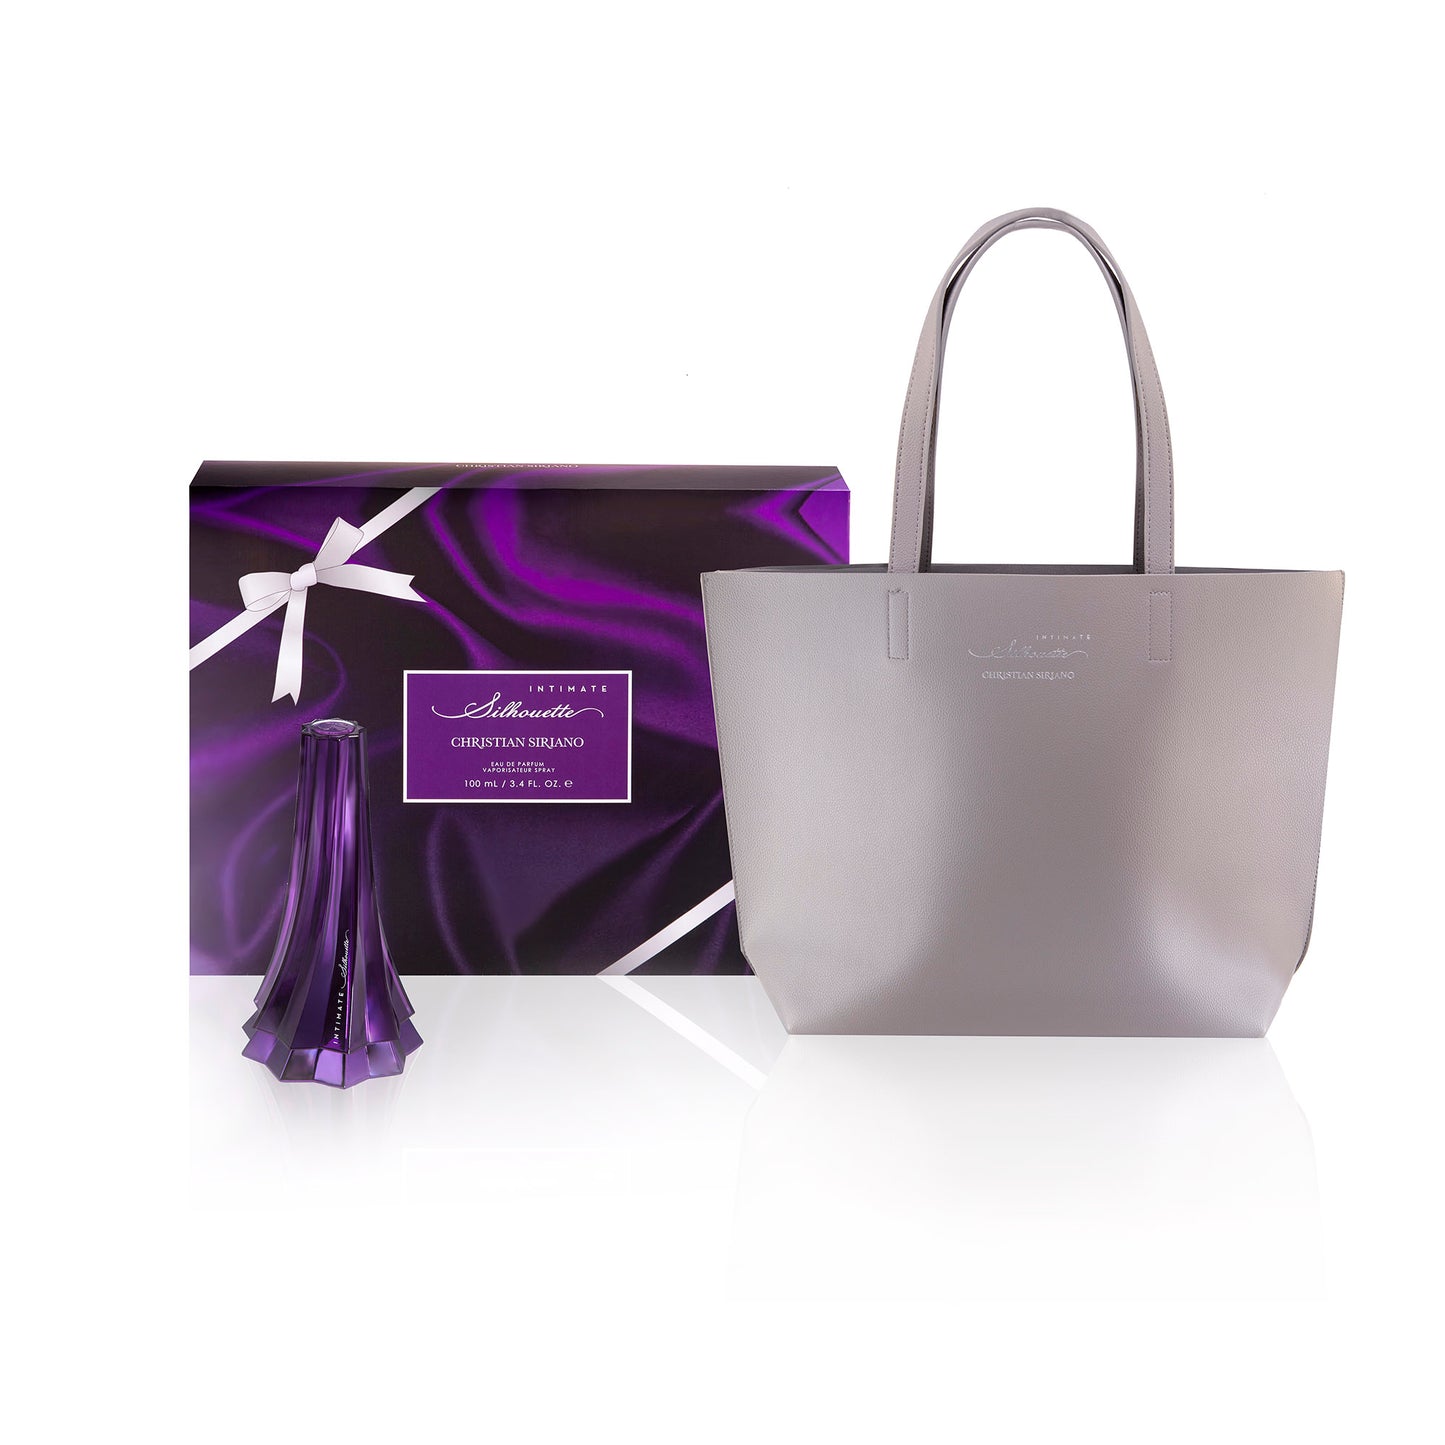 Intimate Silhouette 3.4 oz EDP & Tote Bag Gift Set